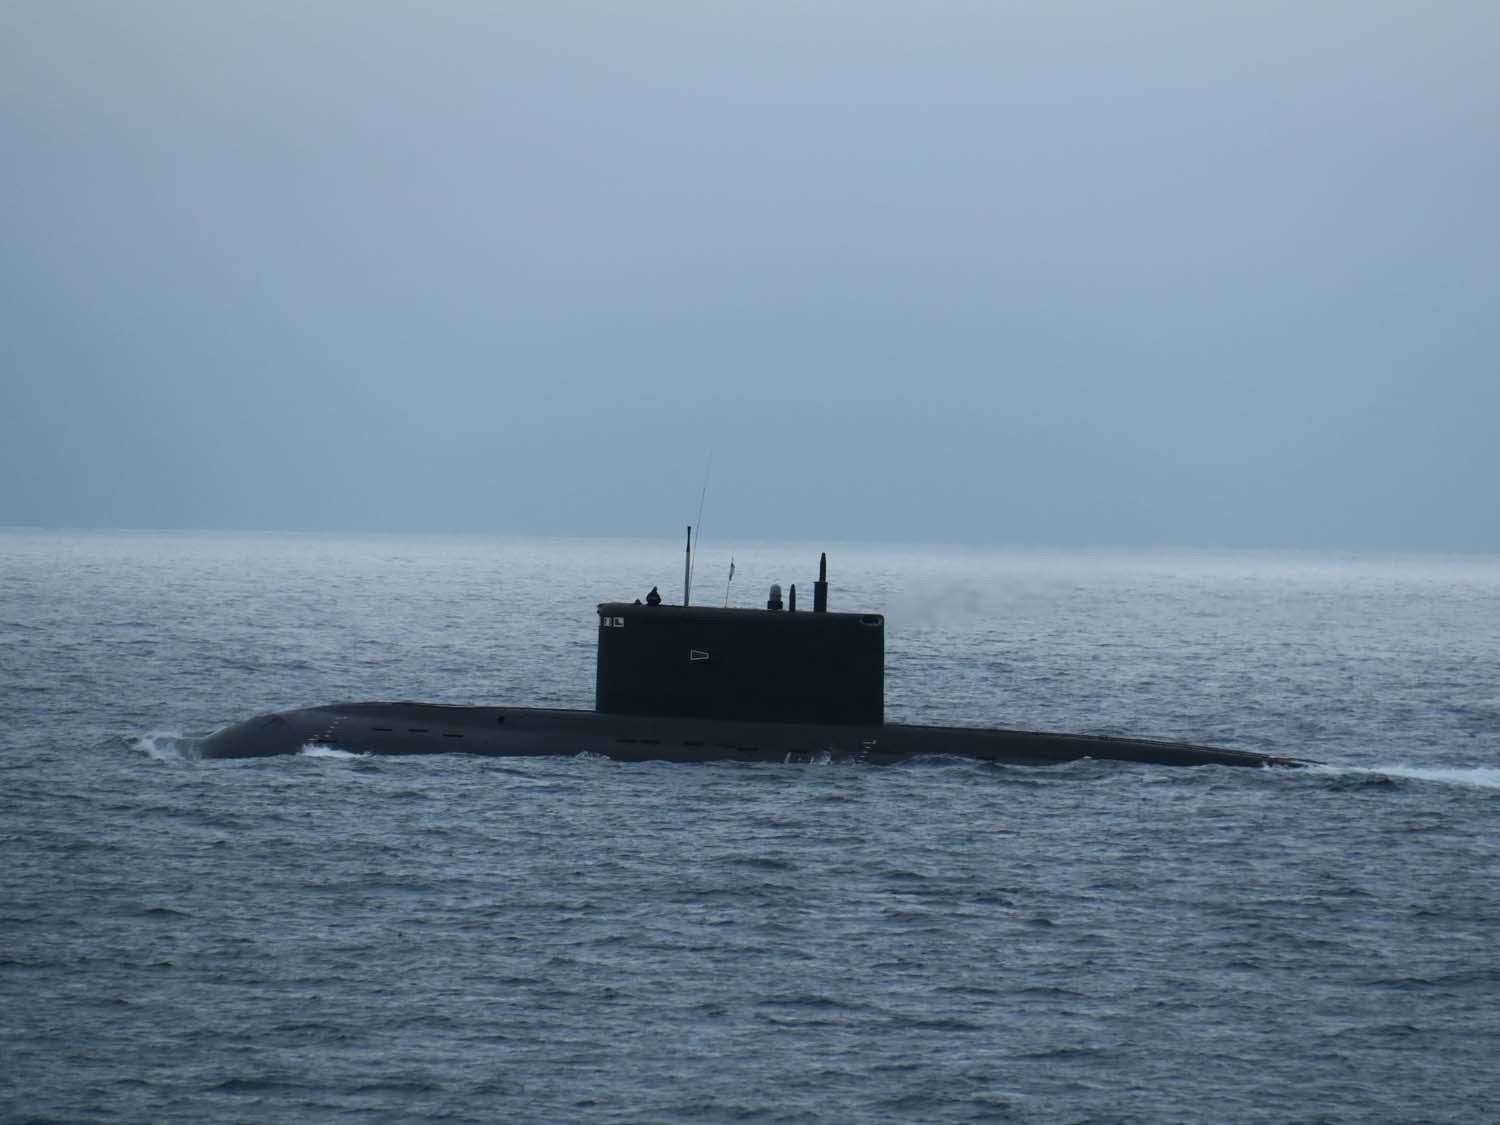 Russian submarine Krasnodar moved through the English Channel